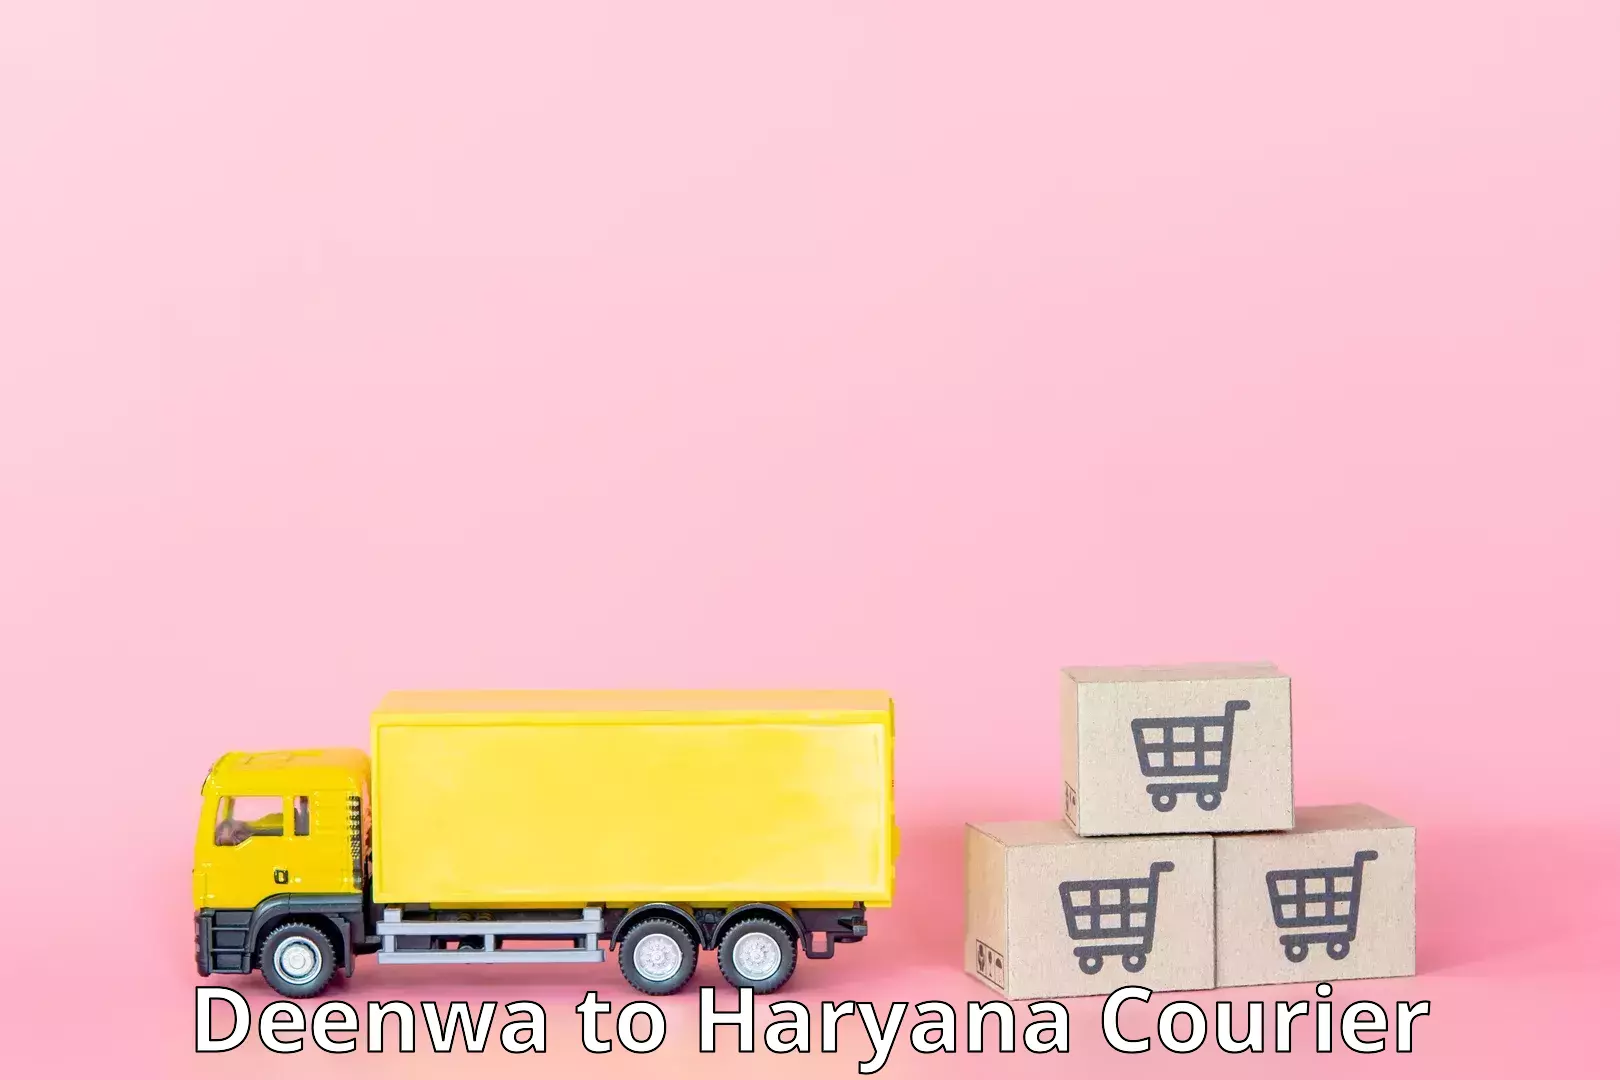 Courier service comparison Deenwa to Sonipat